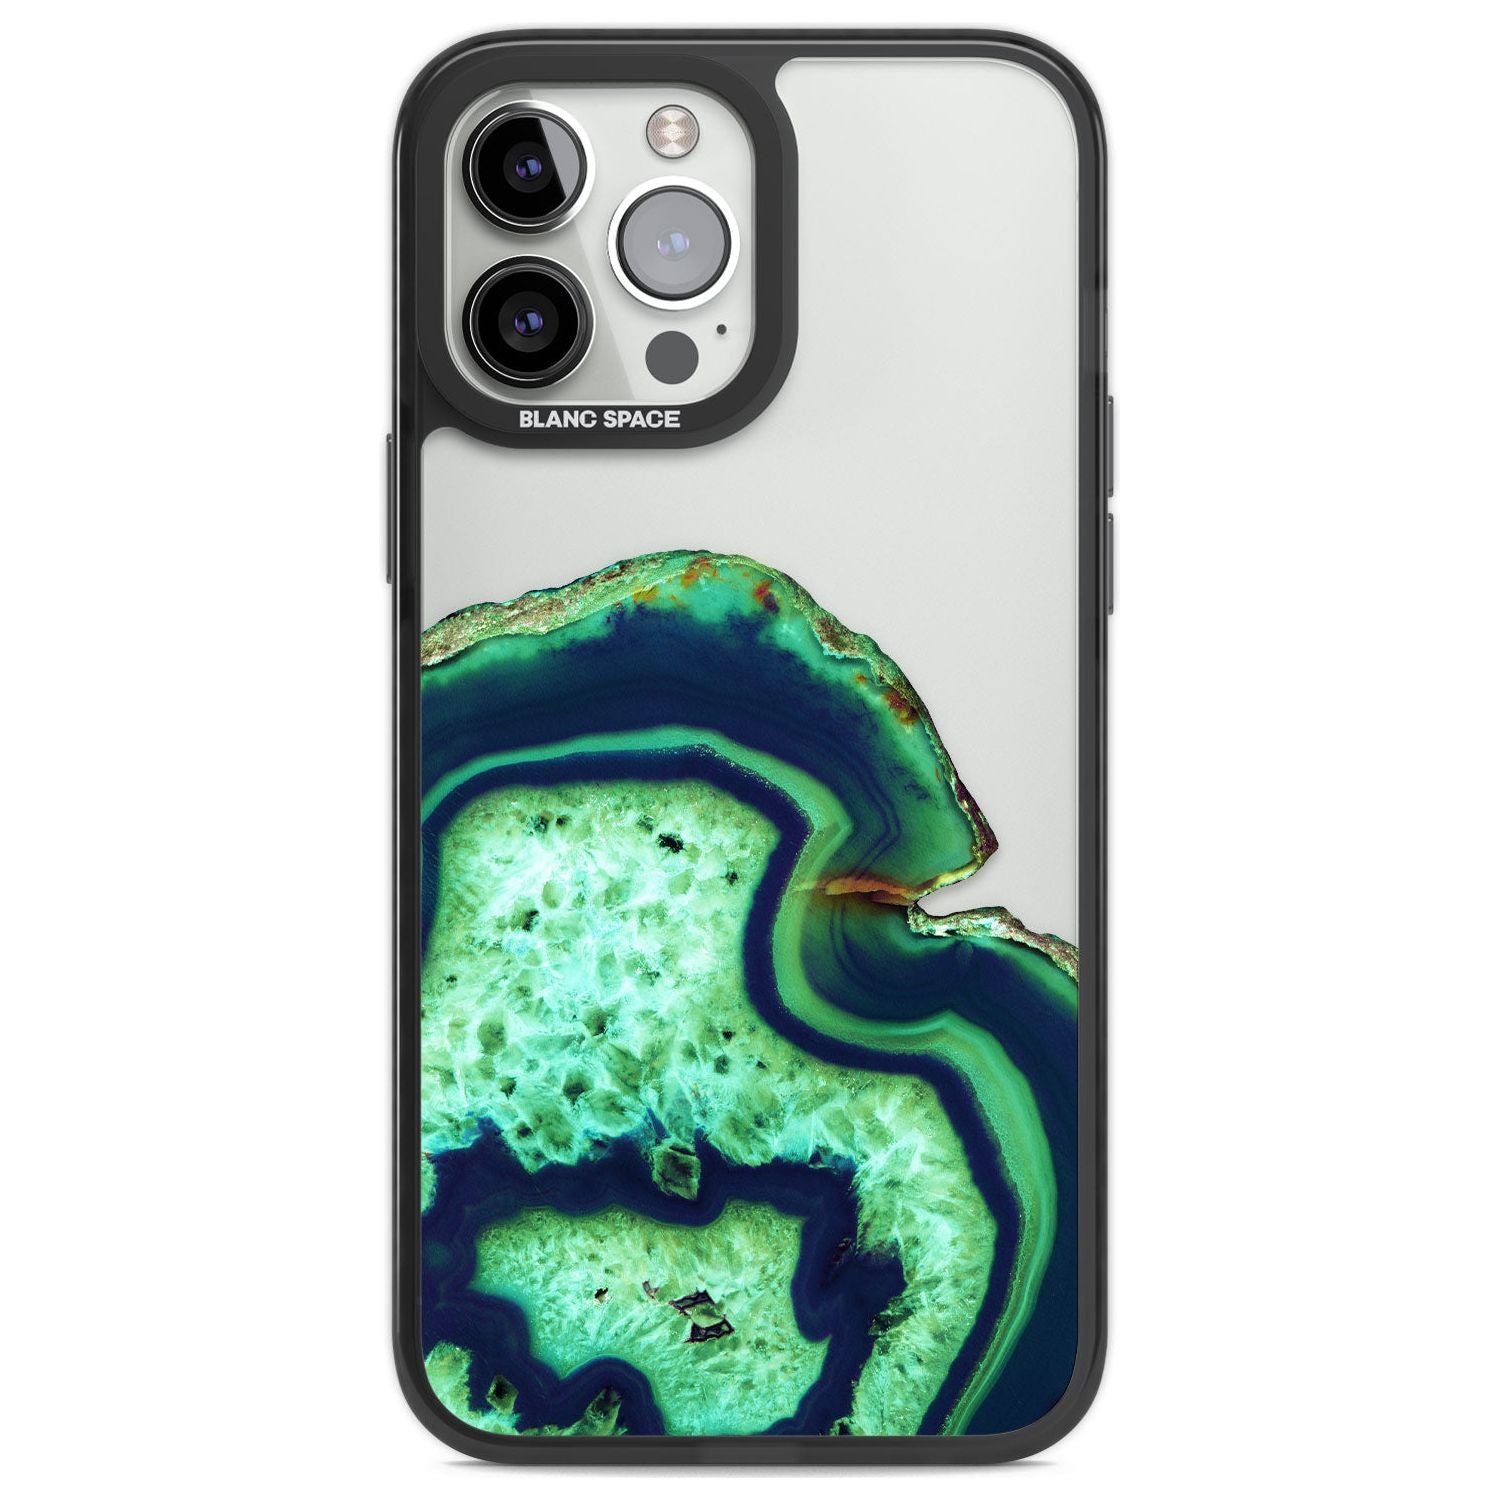 Neon Green & Blue Agate Crystal Transparent Design Phone Case iPhone 13 Pro Max / Black Impact Case,iPhone 14 Pro Max / Black Impact Case Blanc Space